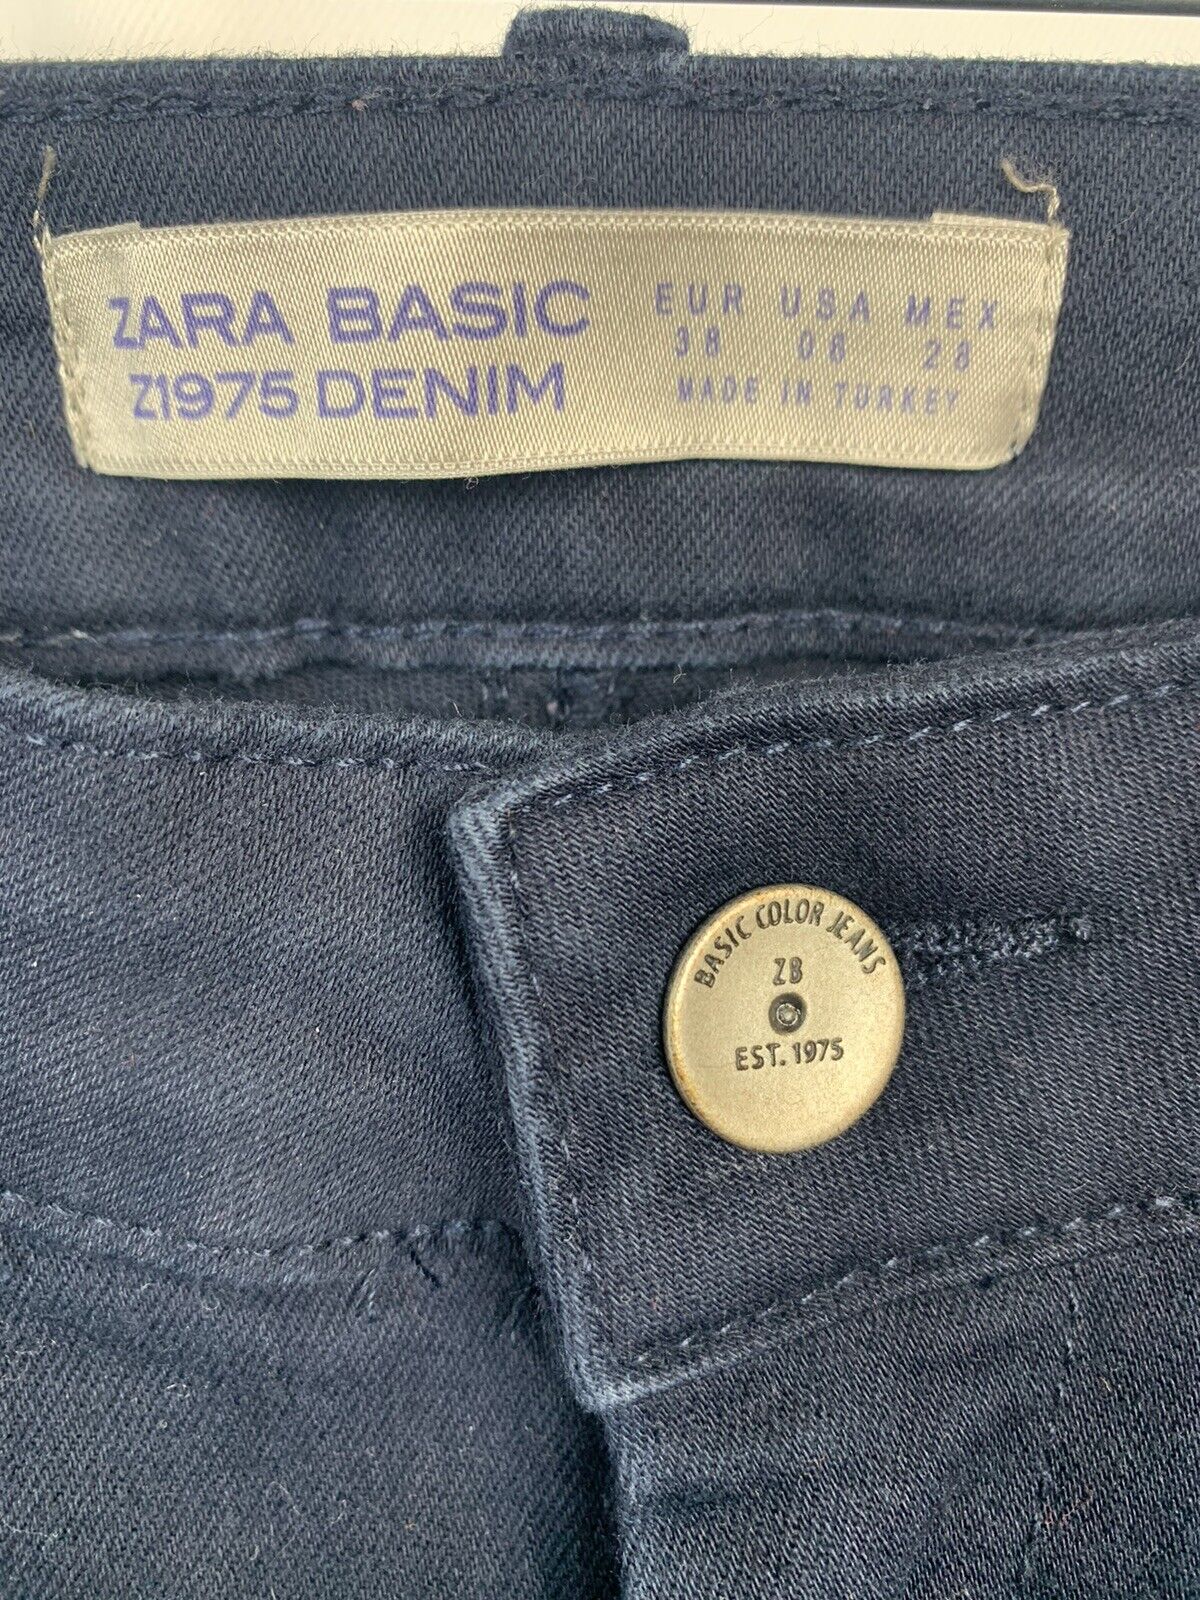 zara basic denim pants us size 6 navy color - image 5